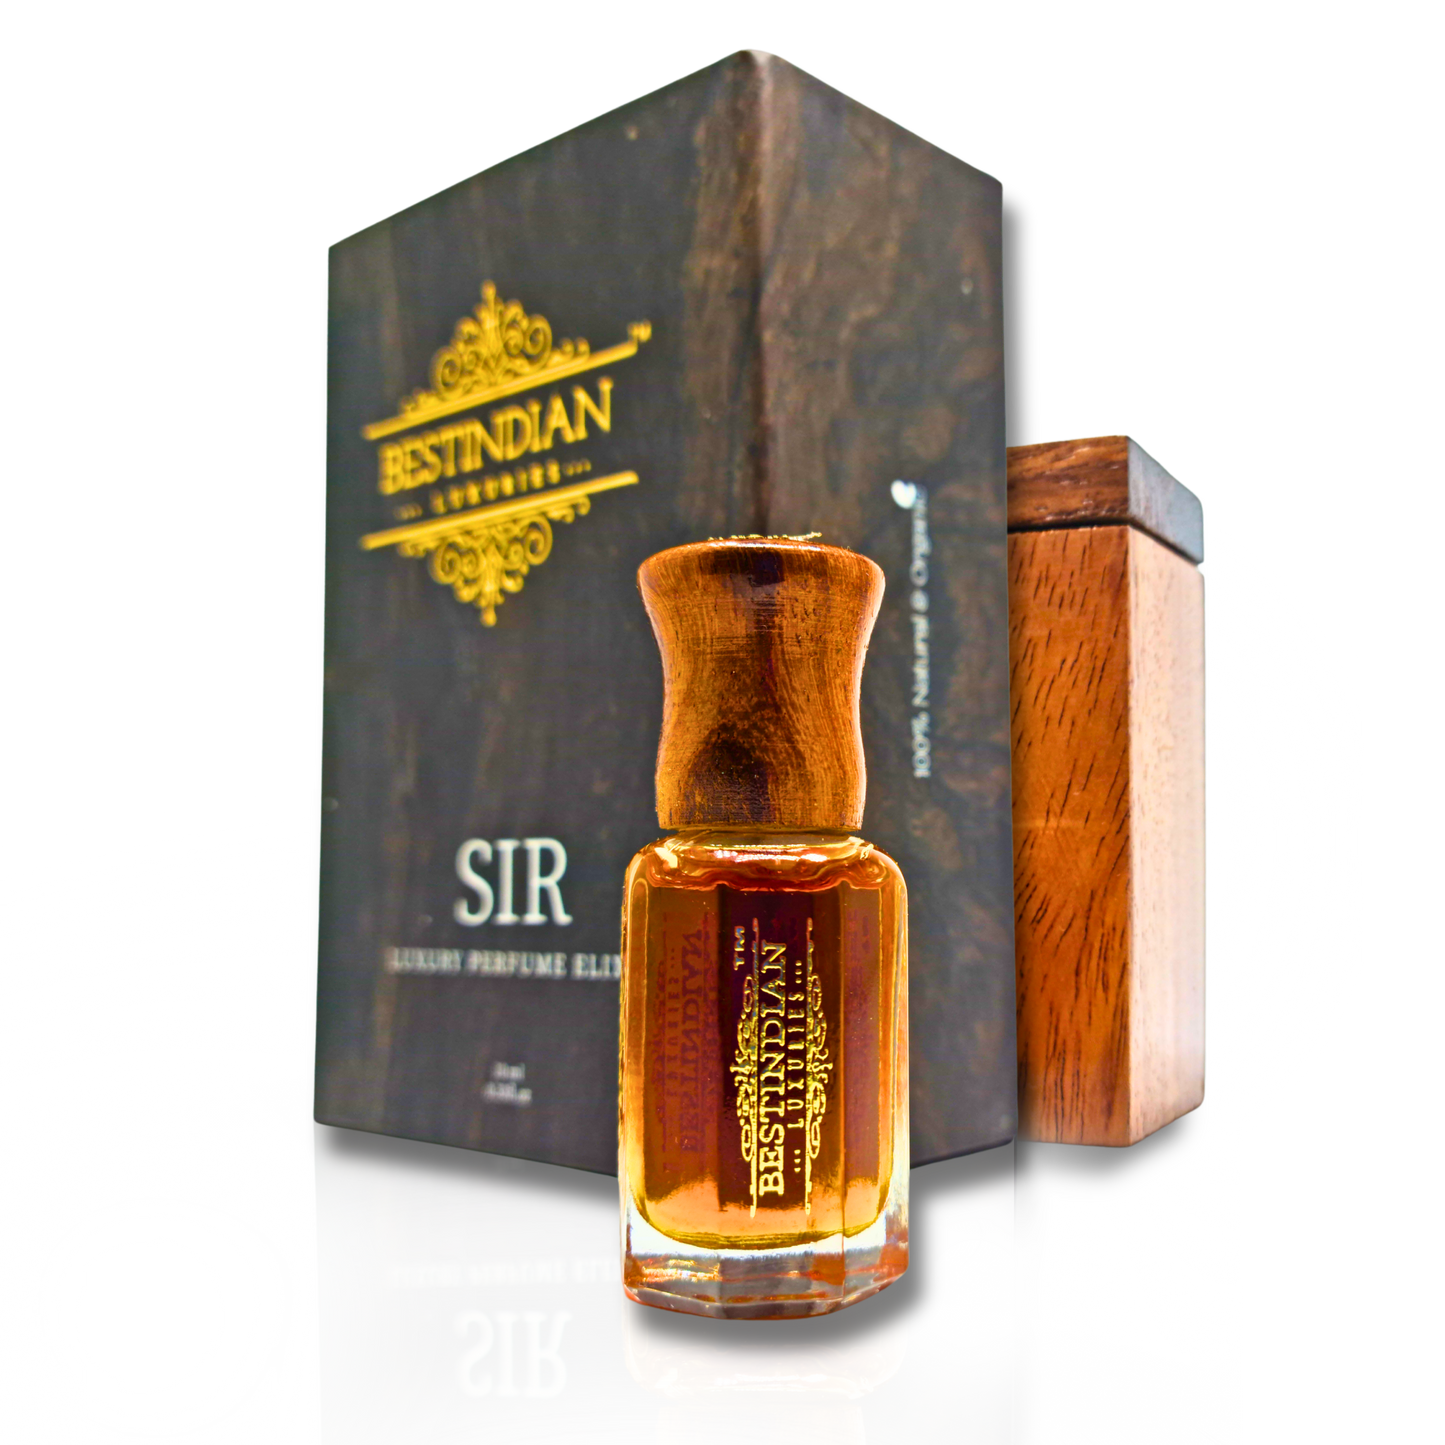 BestIndian Sir Perfume Elixir